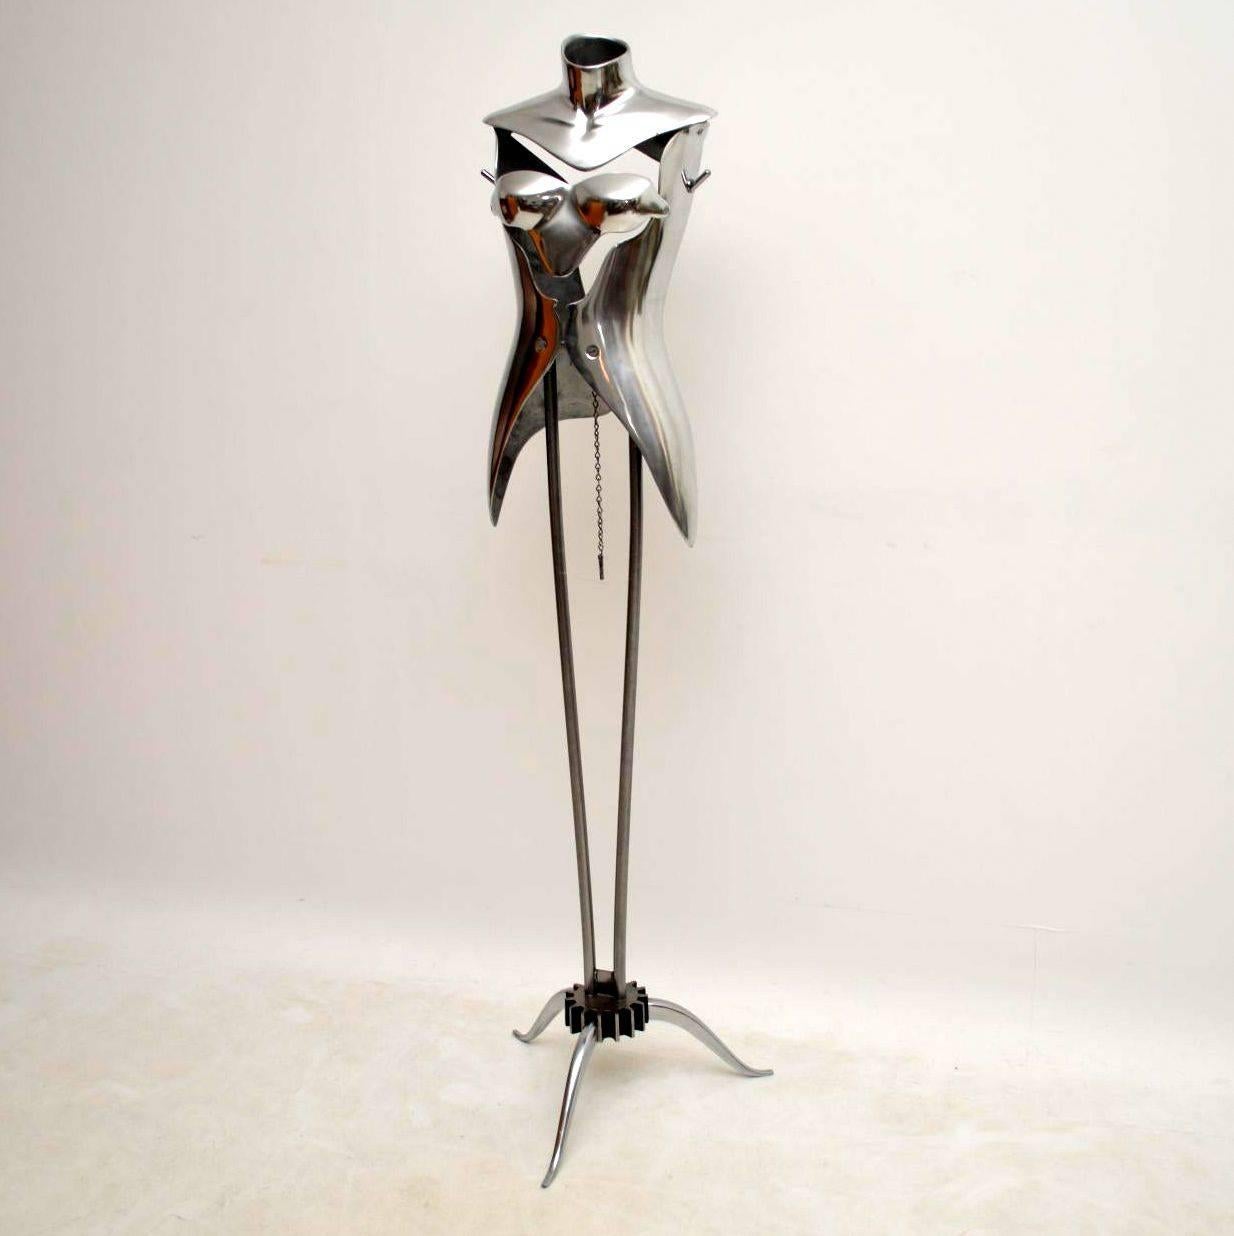 English Aluminium and Steel Mannequin designed by Nigel Coates